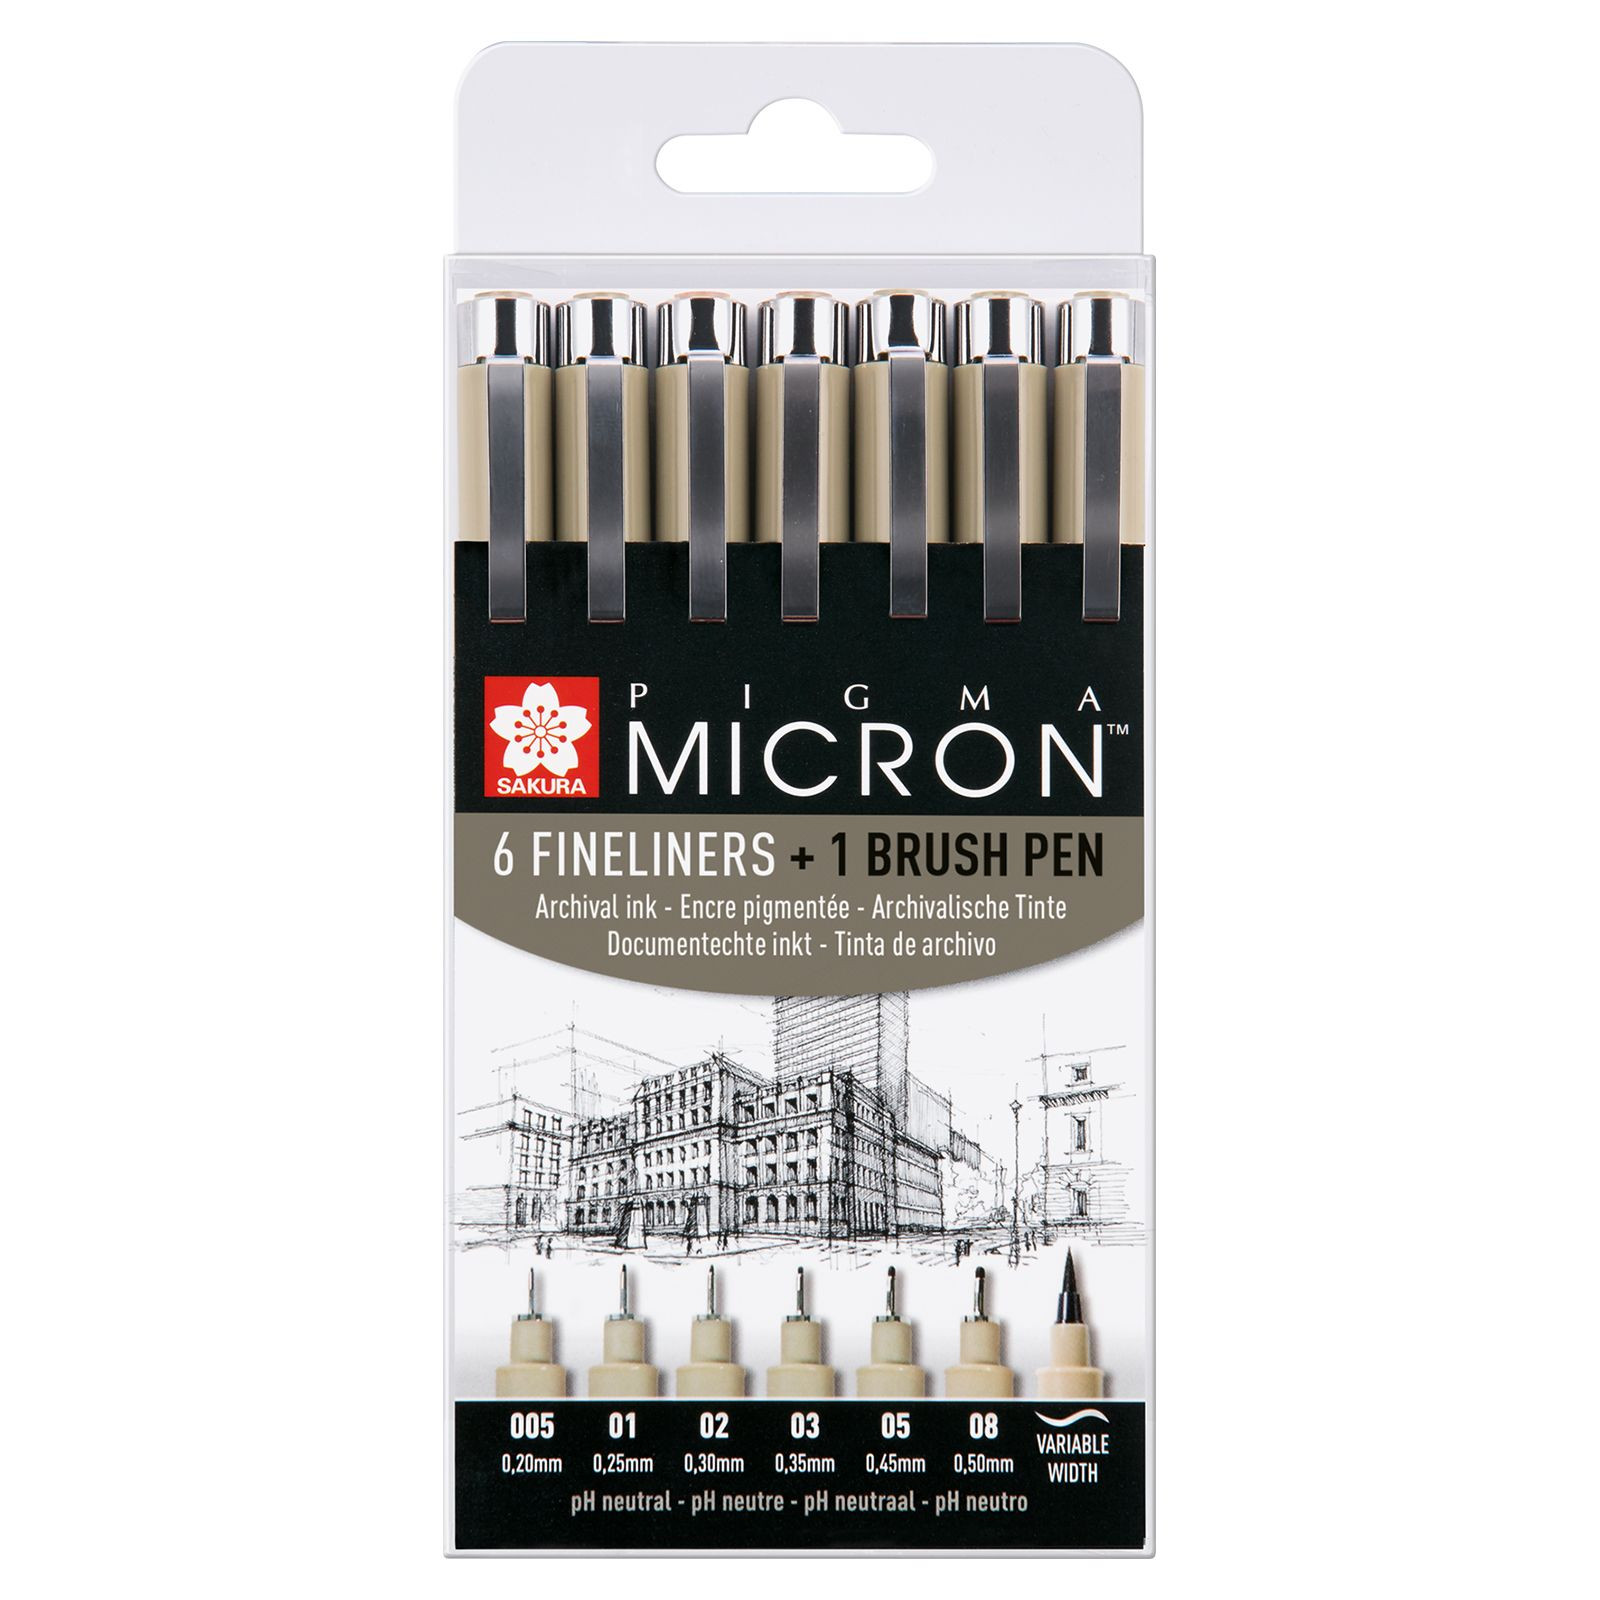 Pigma Micron-Set 6 Fineliners 1 Brush Pen Archival Ink